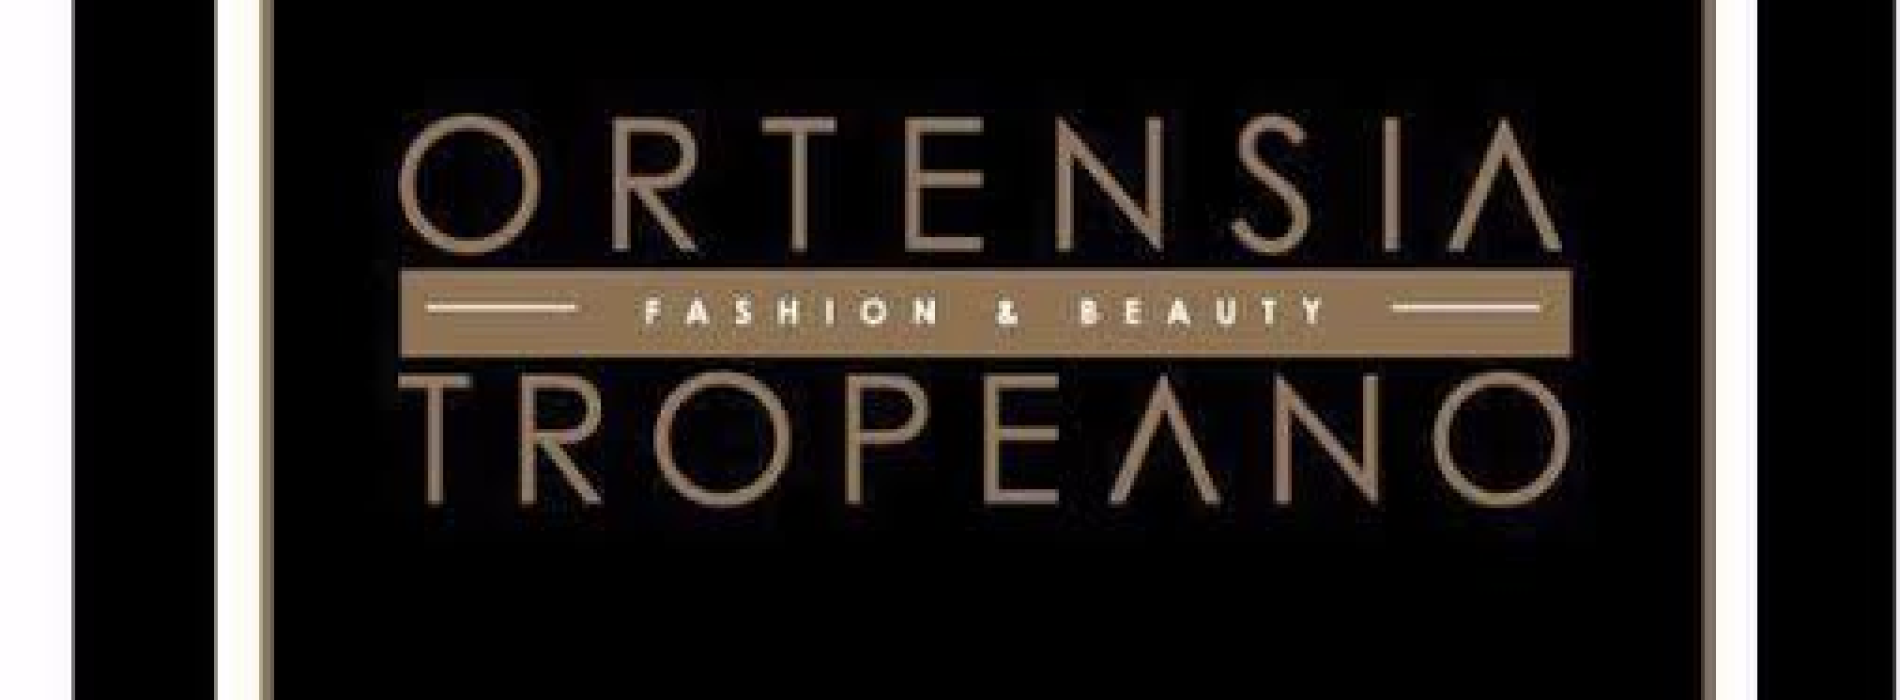 Ortensia Tropeano Fashion & Beauty. Estetica, Make Up, Trendy Bar, Fashion Corner